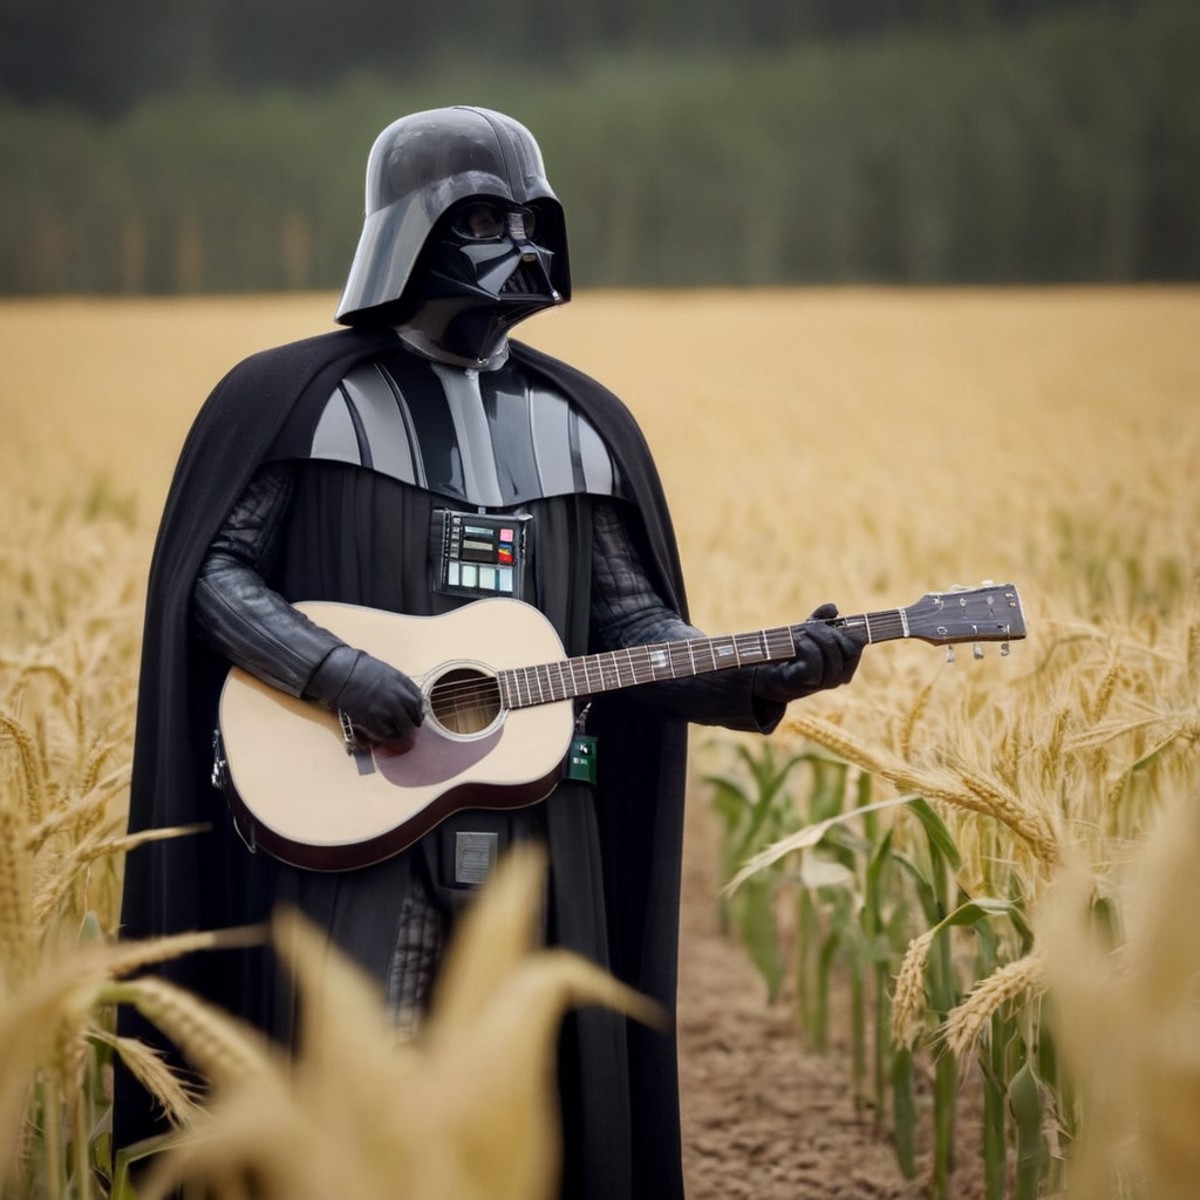 cinematic film still of  <lora:Darth Vader:1.5>
Darth Vader a darth vader costumed in a cornfield with a guitar case in st...